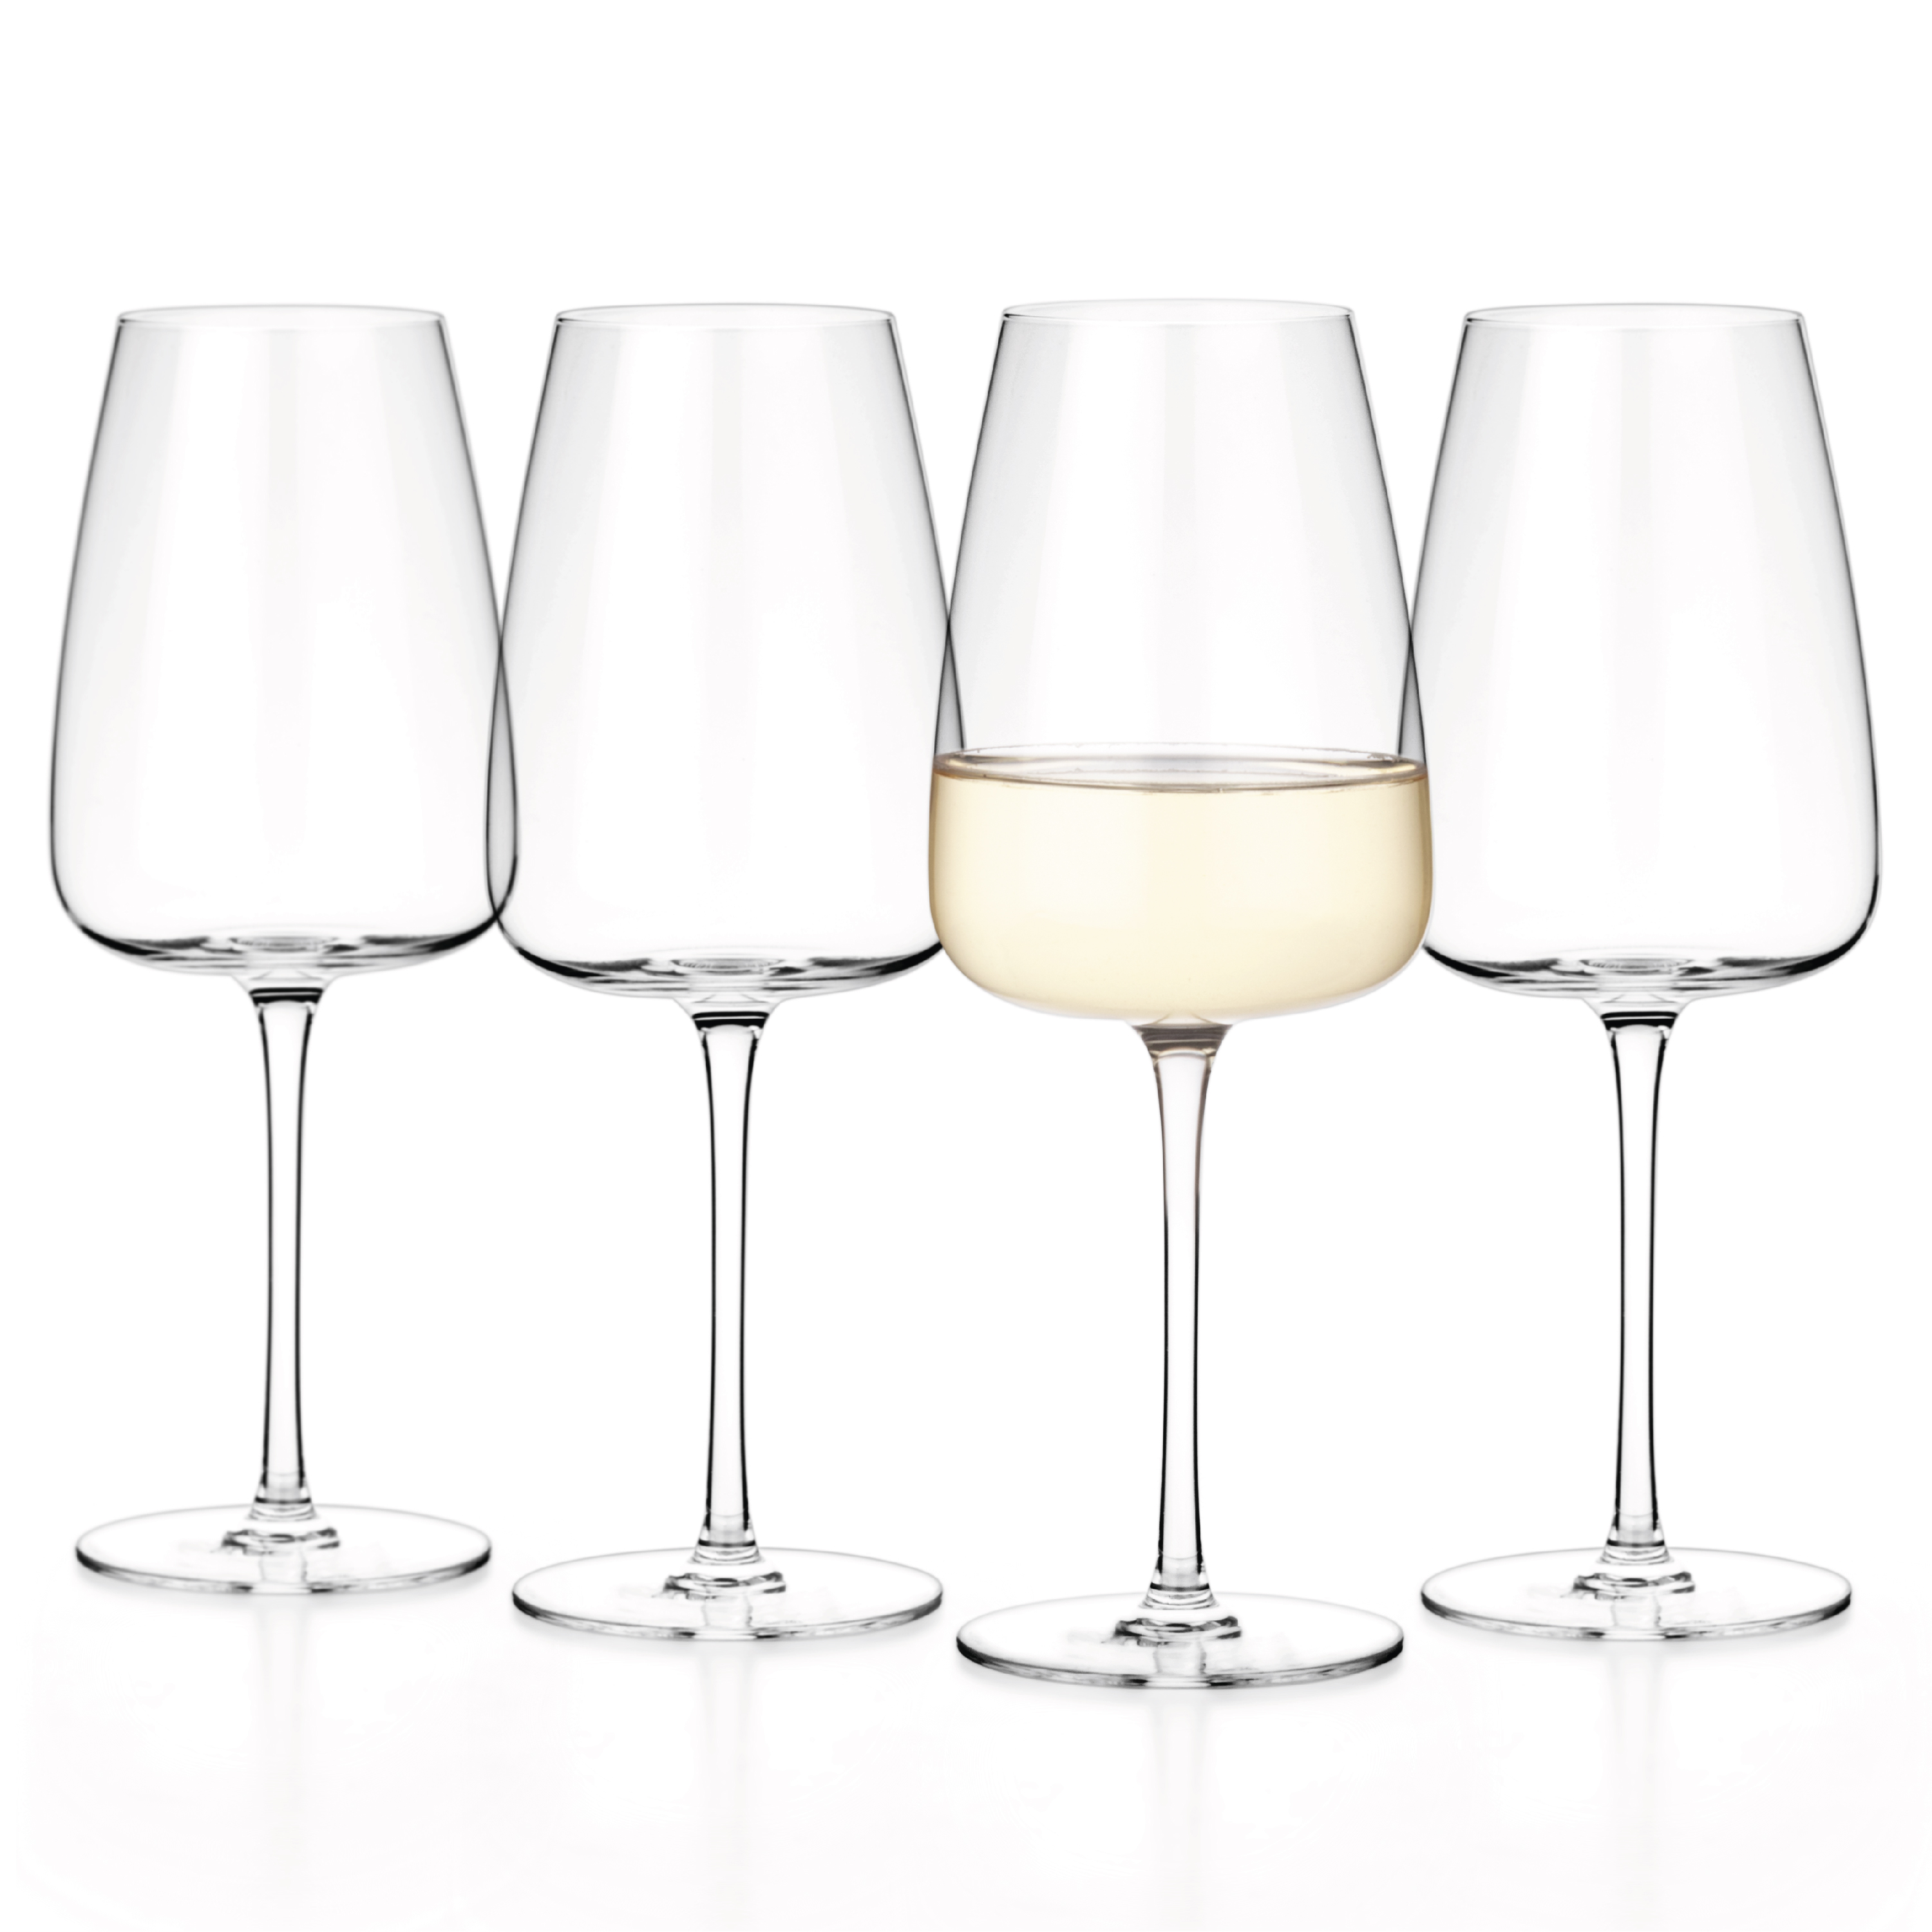 WHITE WINE GLASSES 19 FL.OZ - WINE GLASSES - LuxBe Store